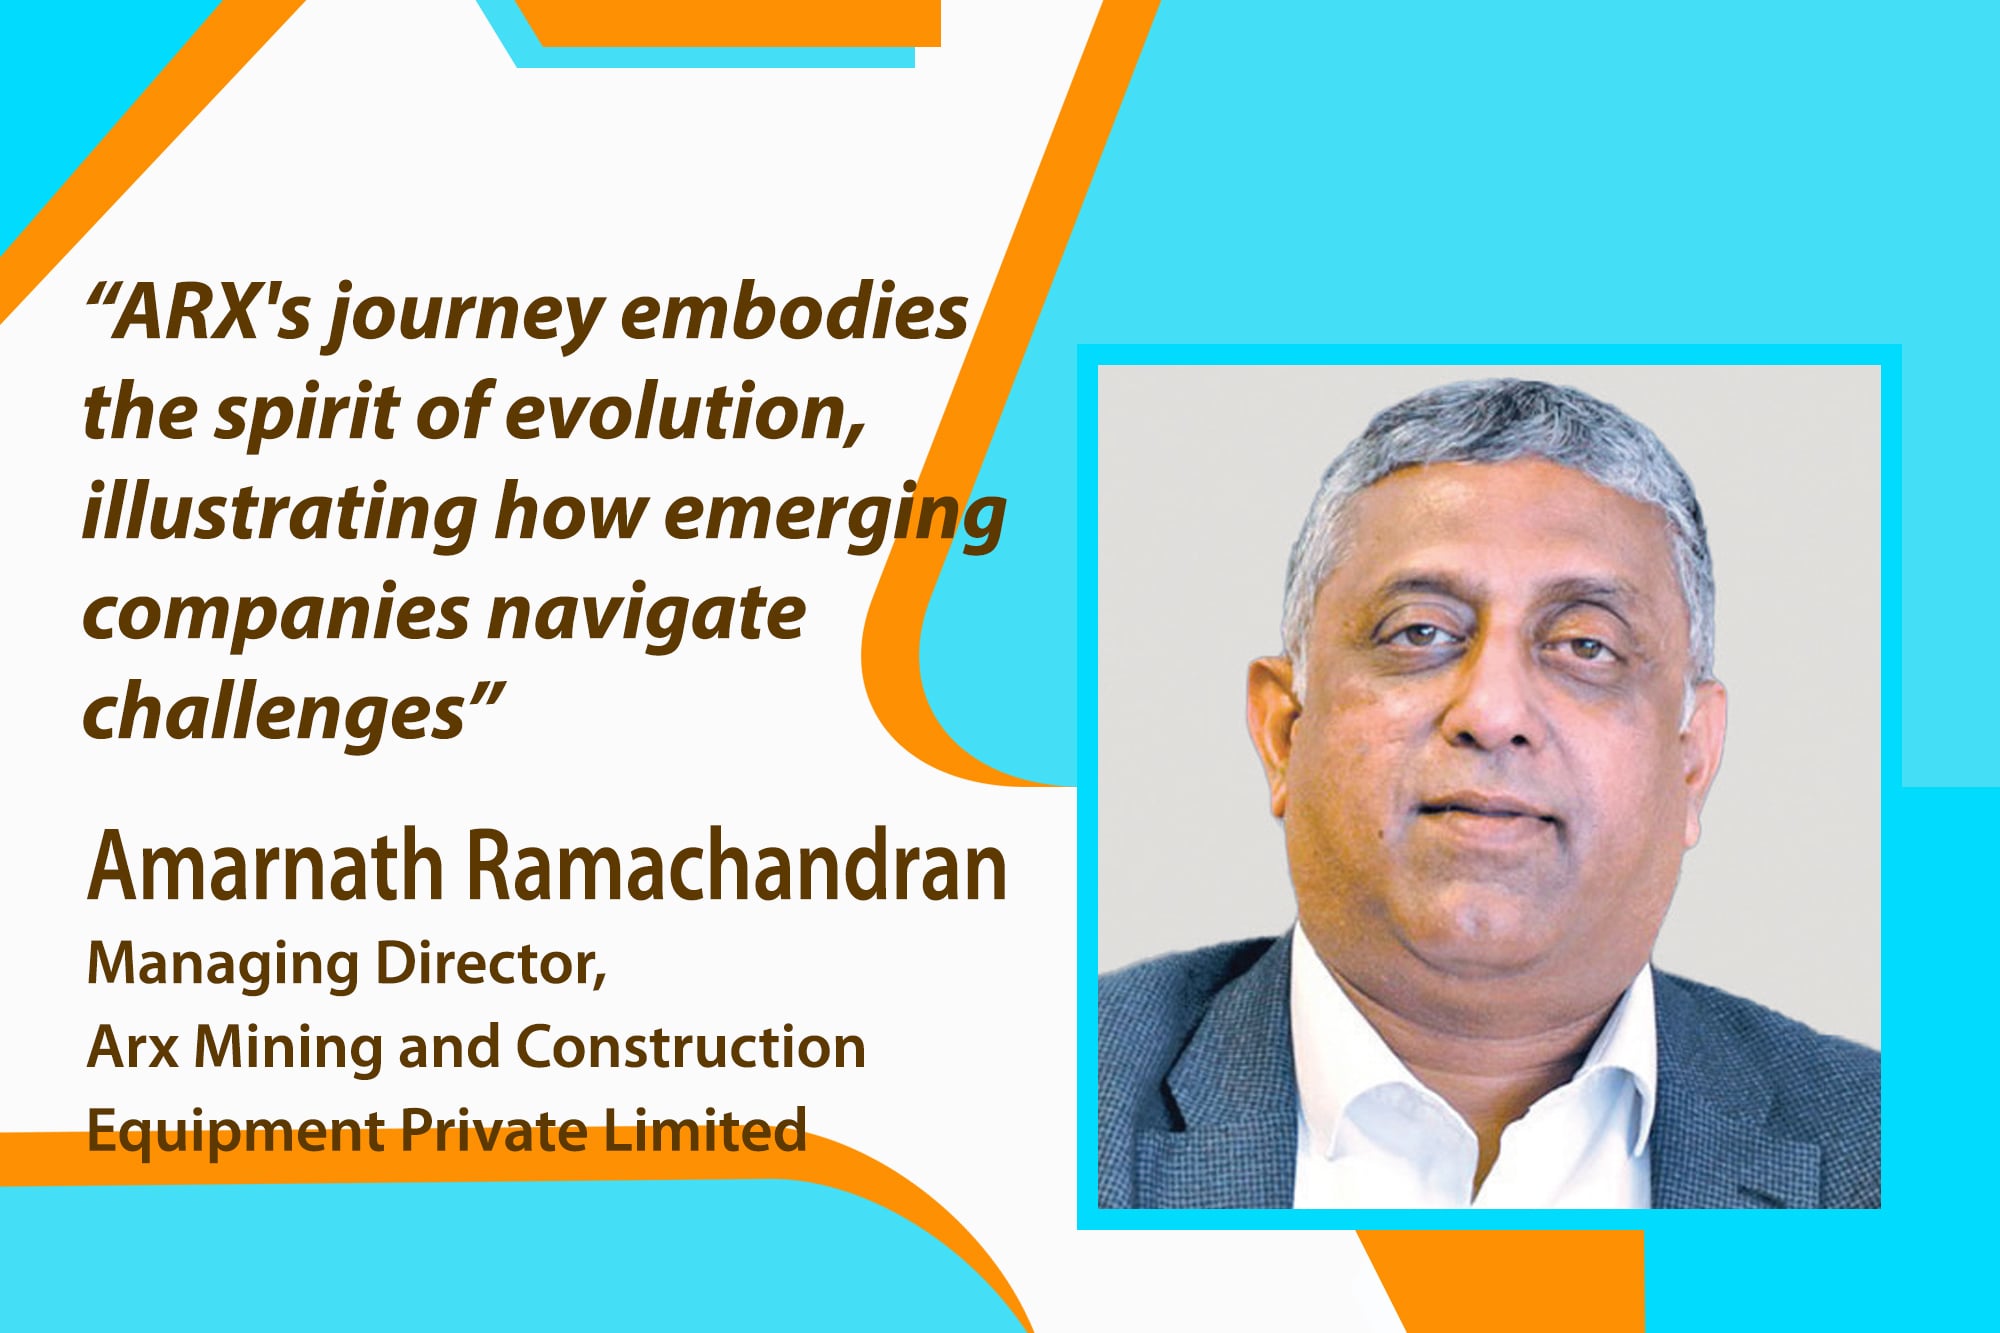 Amarnath Ramachandran, Managing Director of Arx Mining